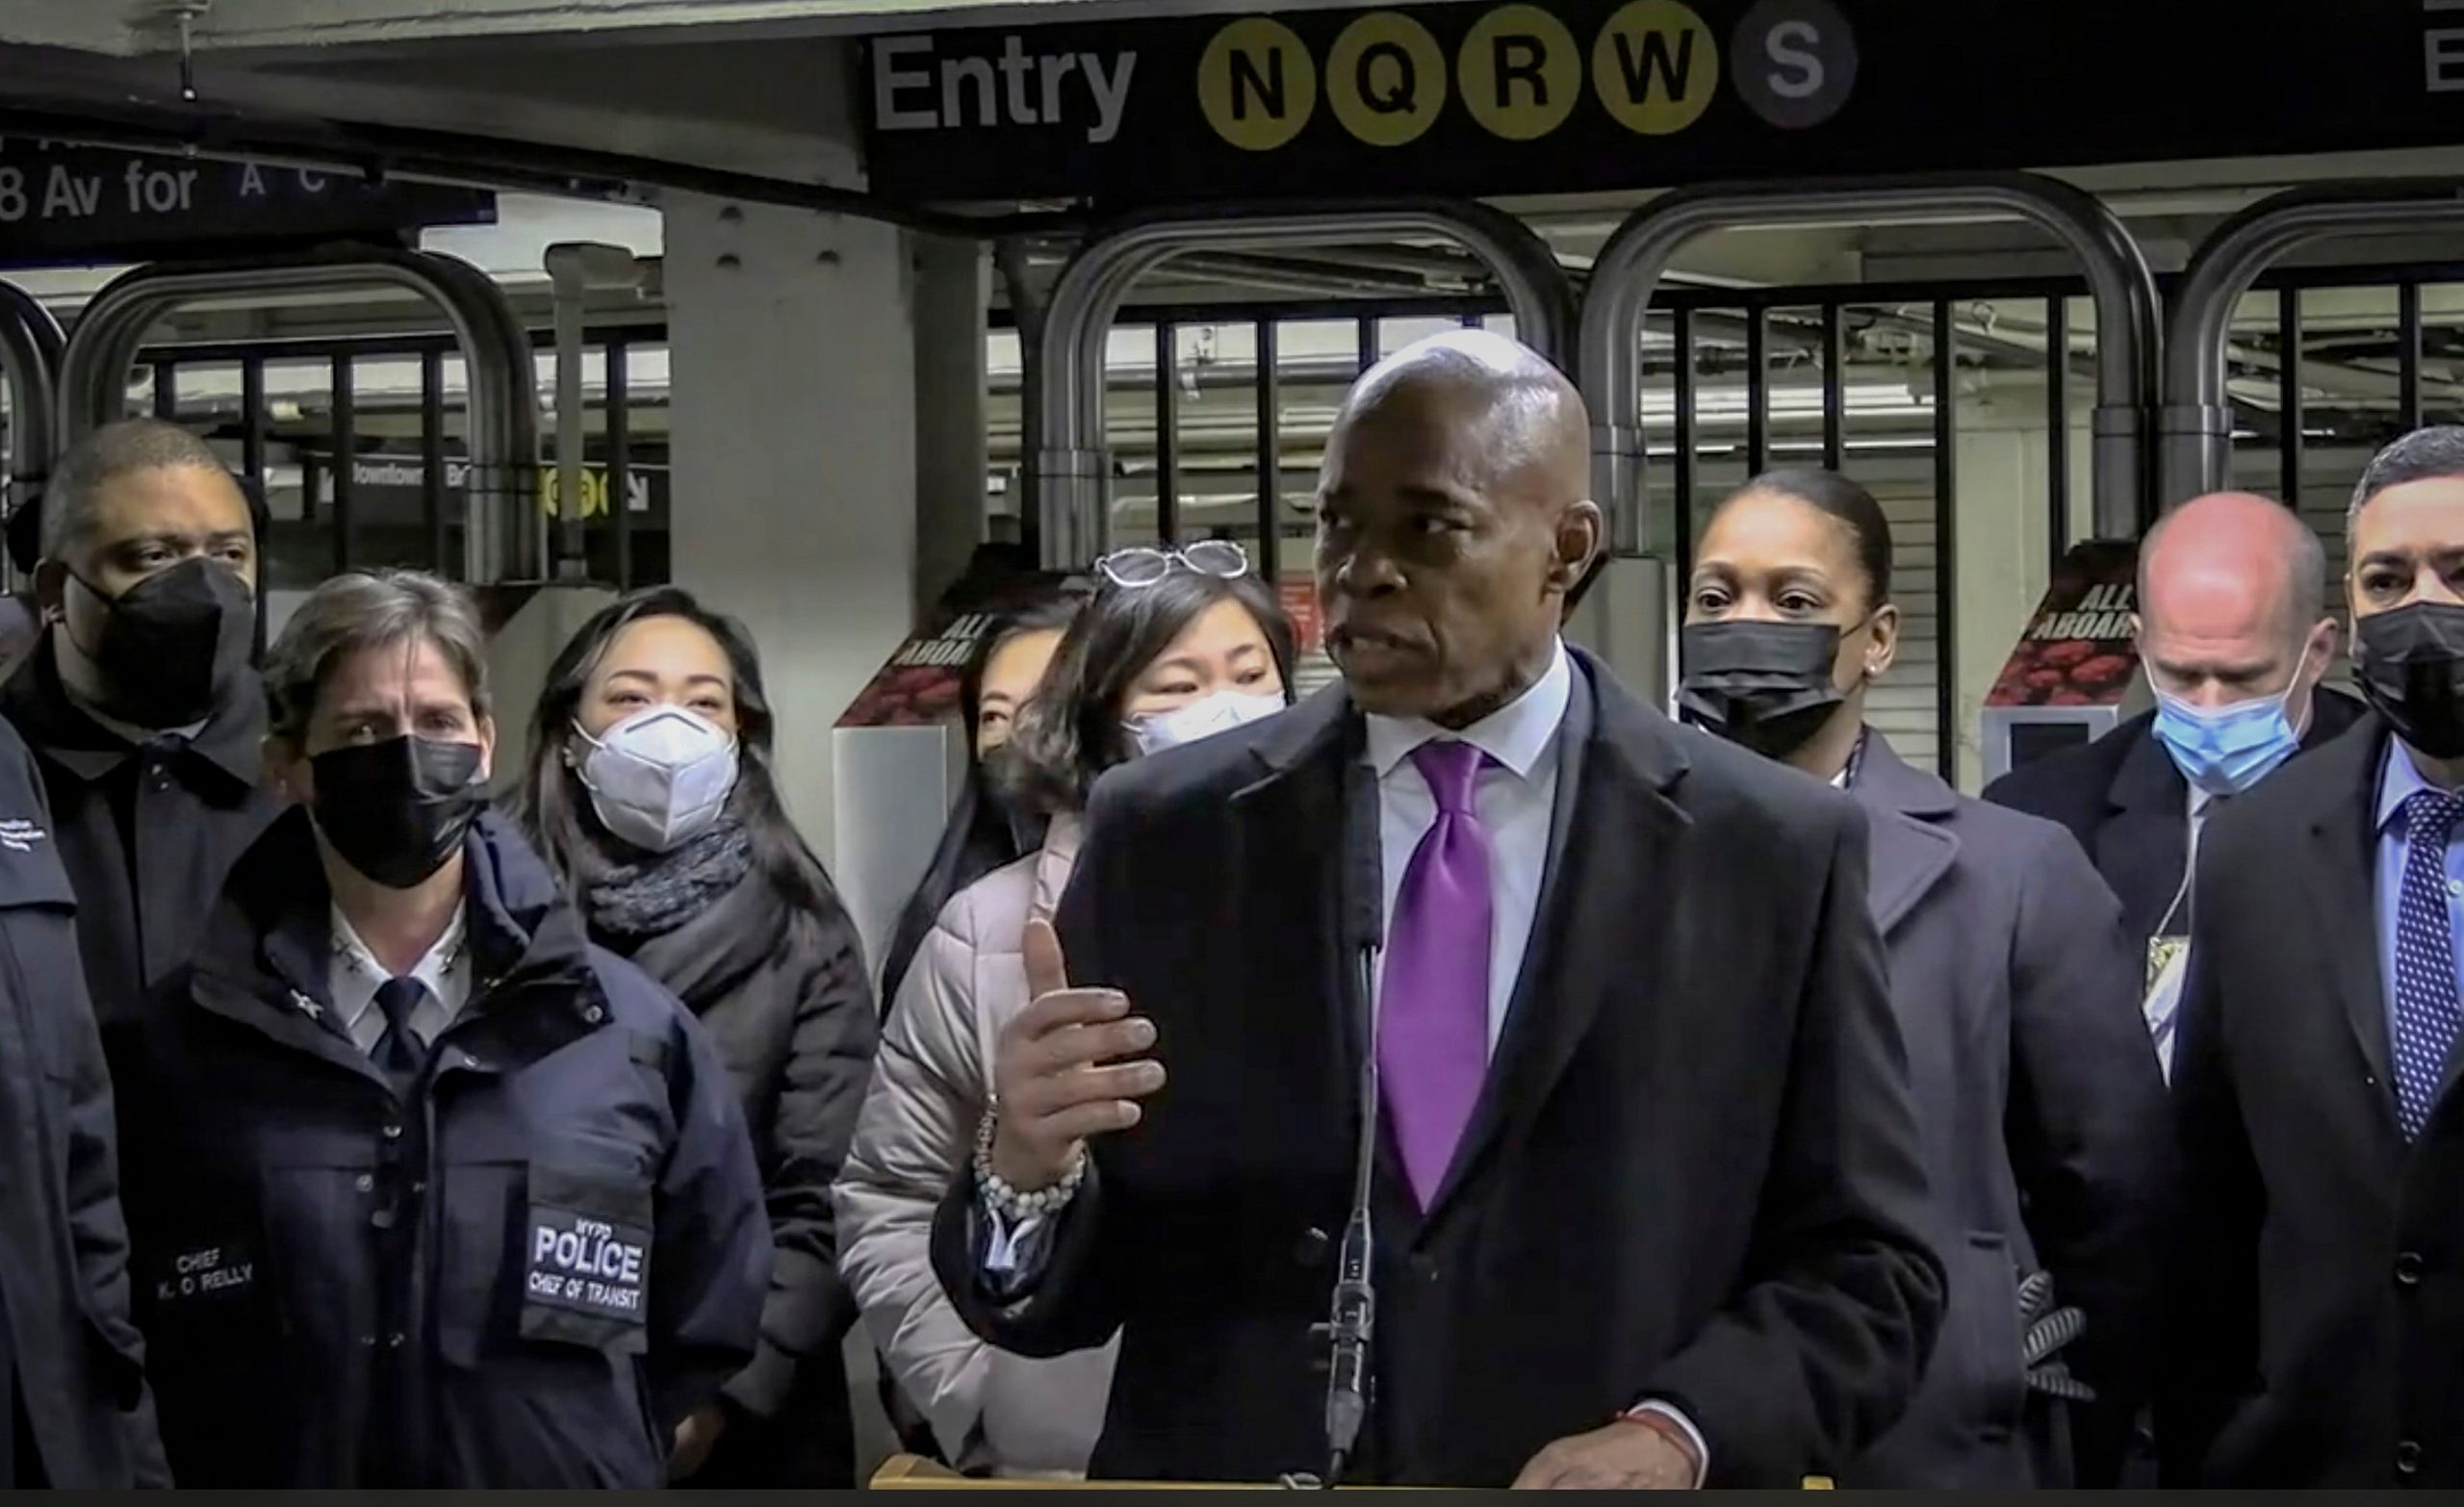 NYC Mayor felt ‘unsafe’ on subway trains, ‘saw homeless people’